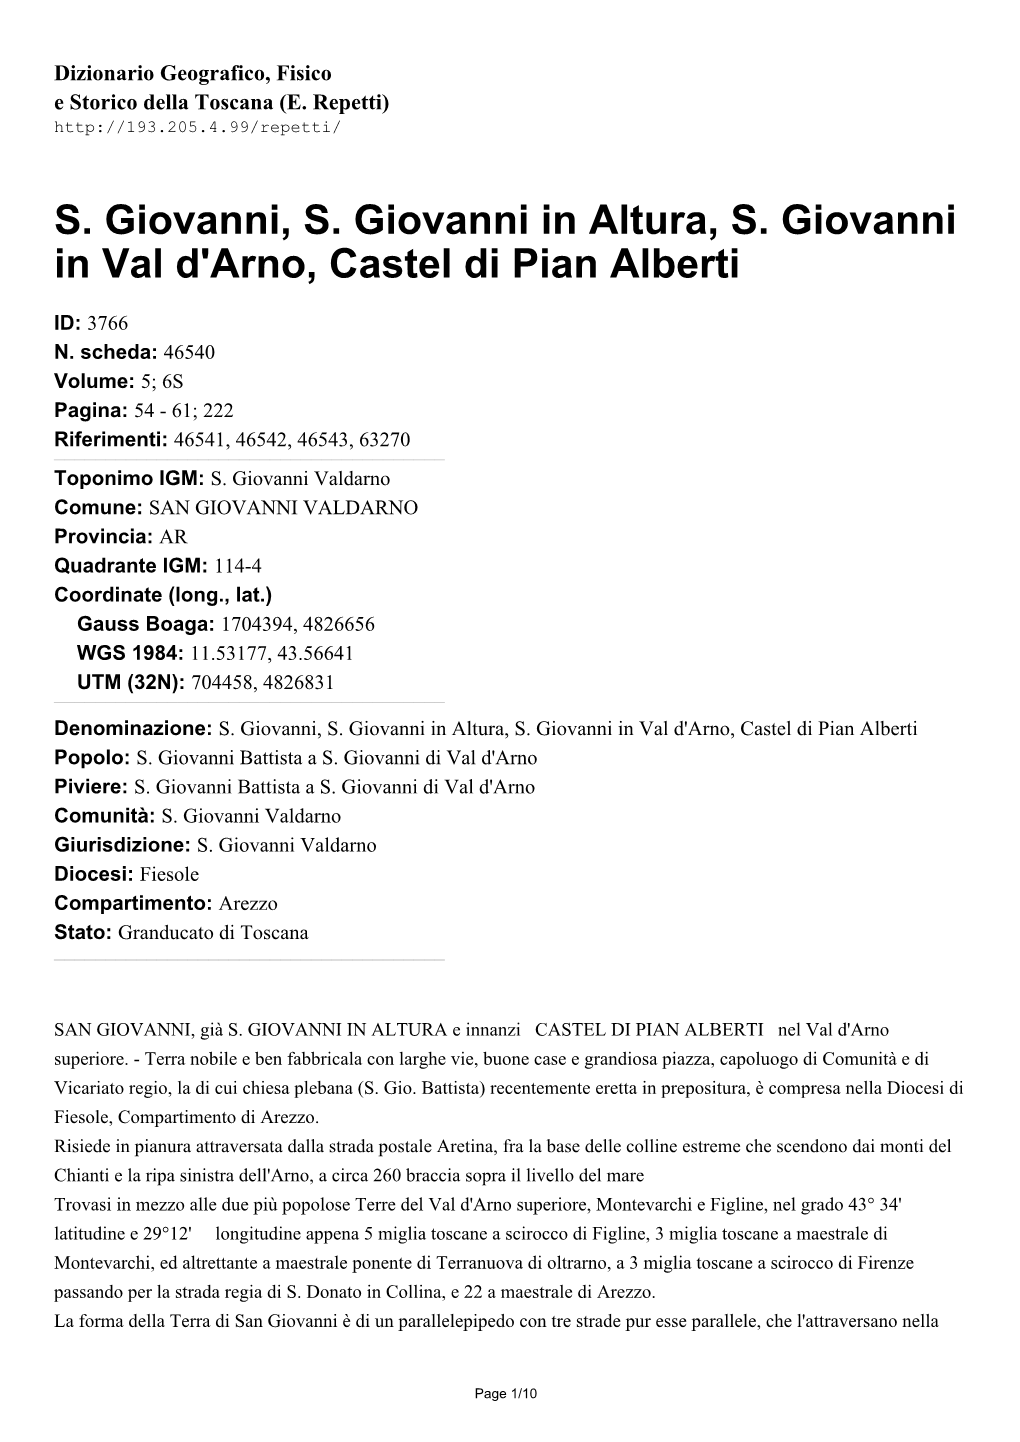 S. Giovanni, S. Giovanni in Altura, S. Giovanni in Val D'arno, Castel Di Pian Alberti